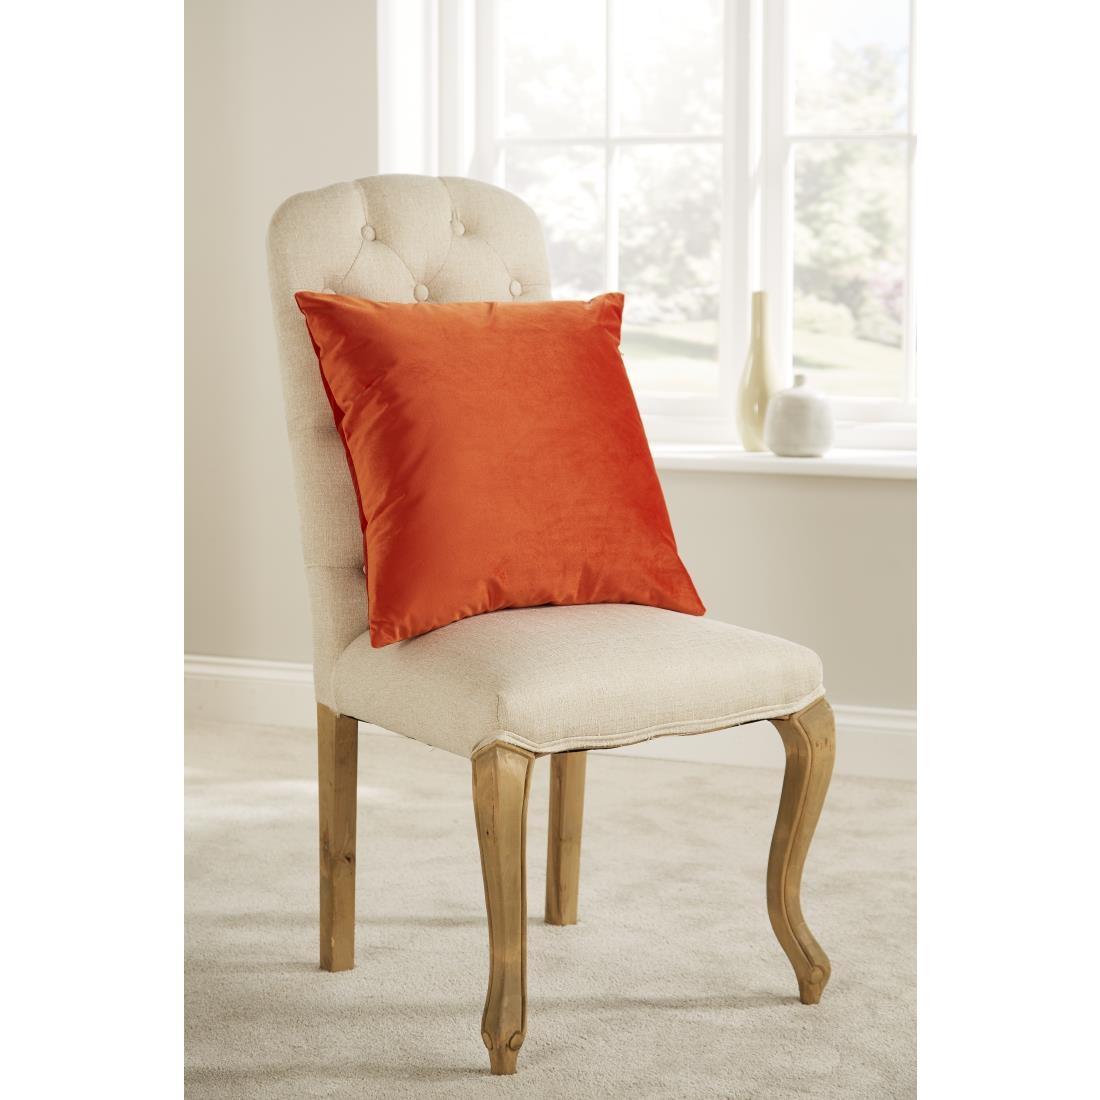 Mitre Comfort D'Arcy Unpiped Cushion Orange - HB799  - 1